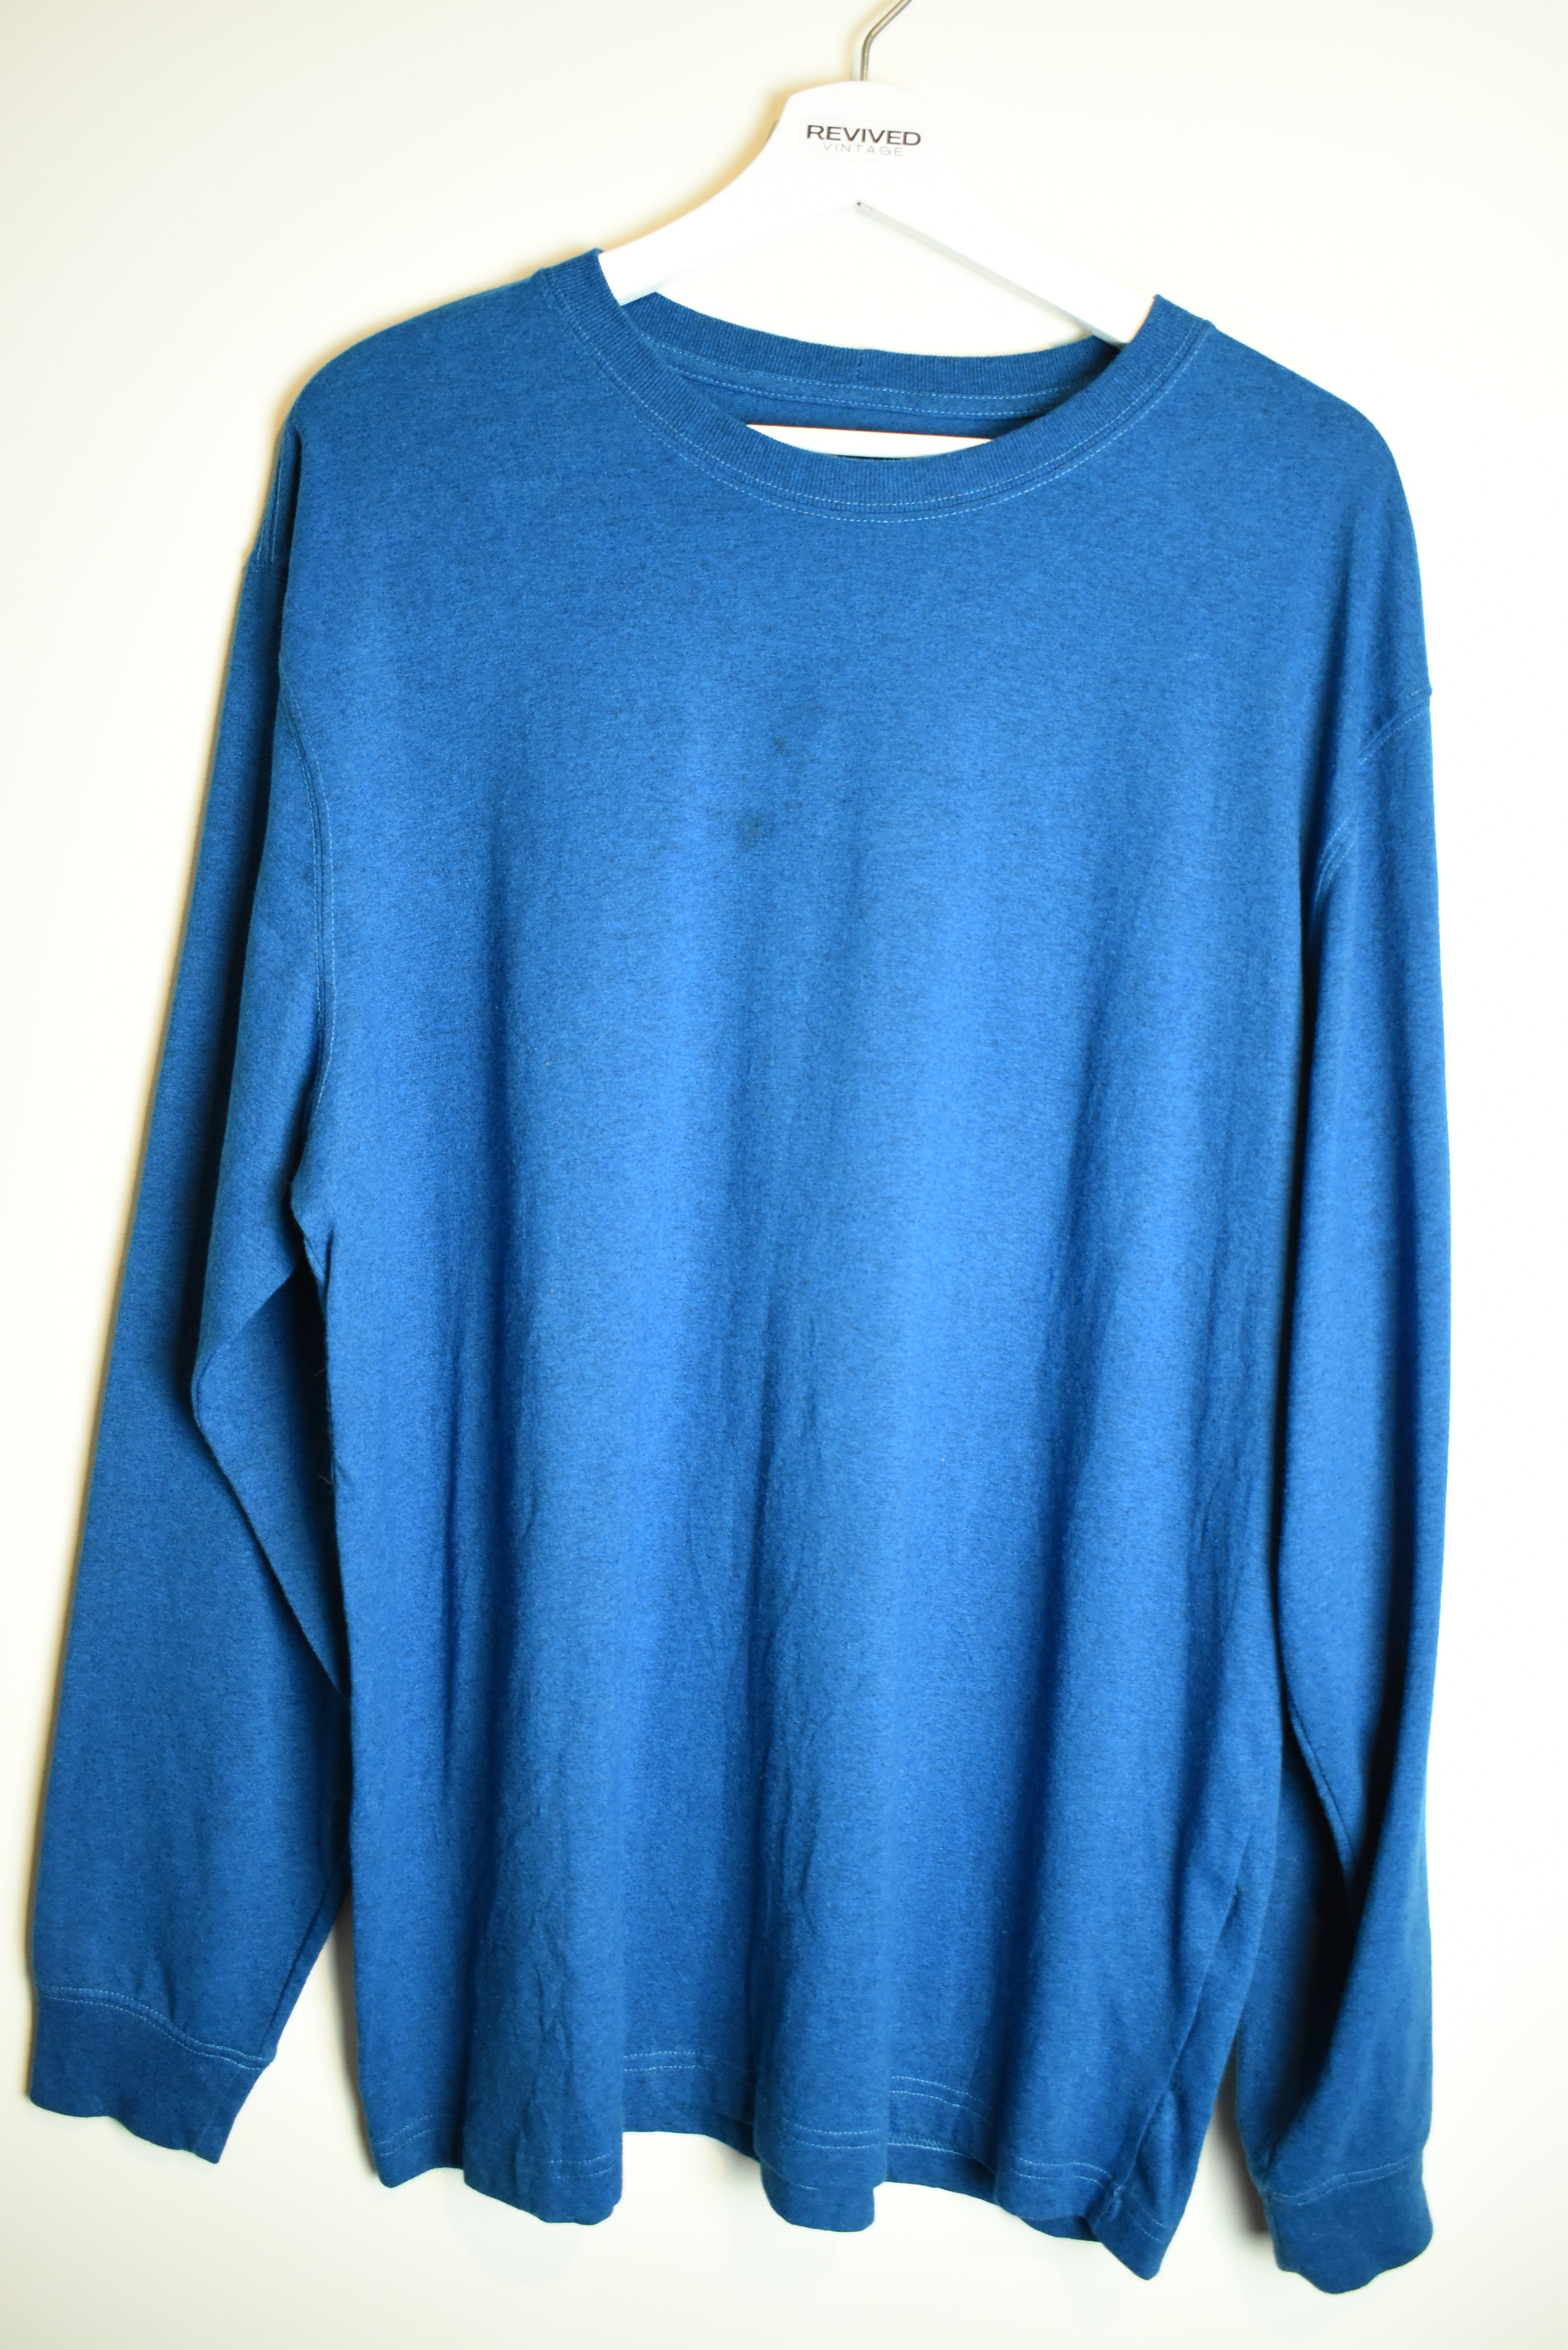 Vintage Carhartt Blue Long Sleeve Cotton Shirt Original Fit Large